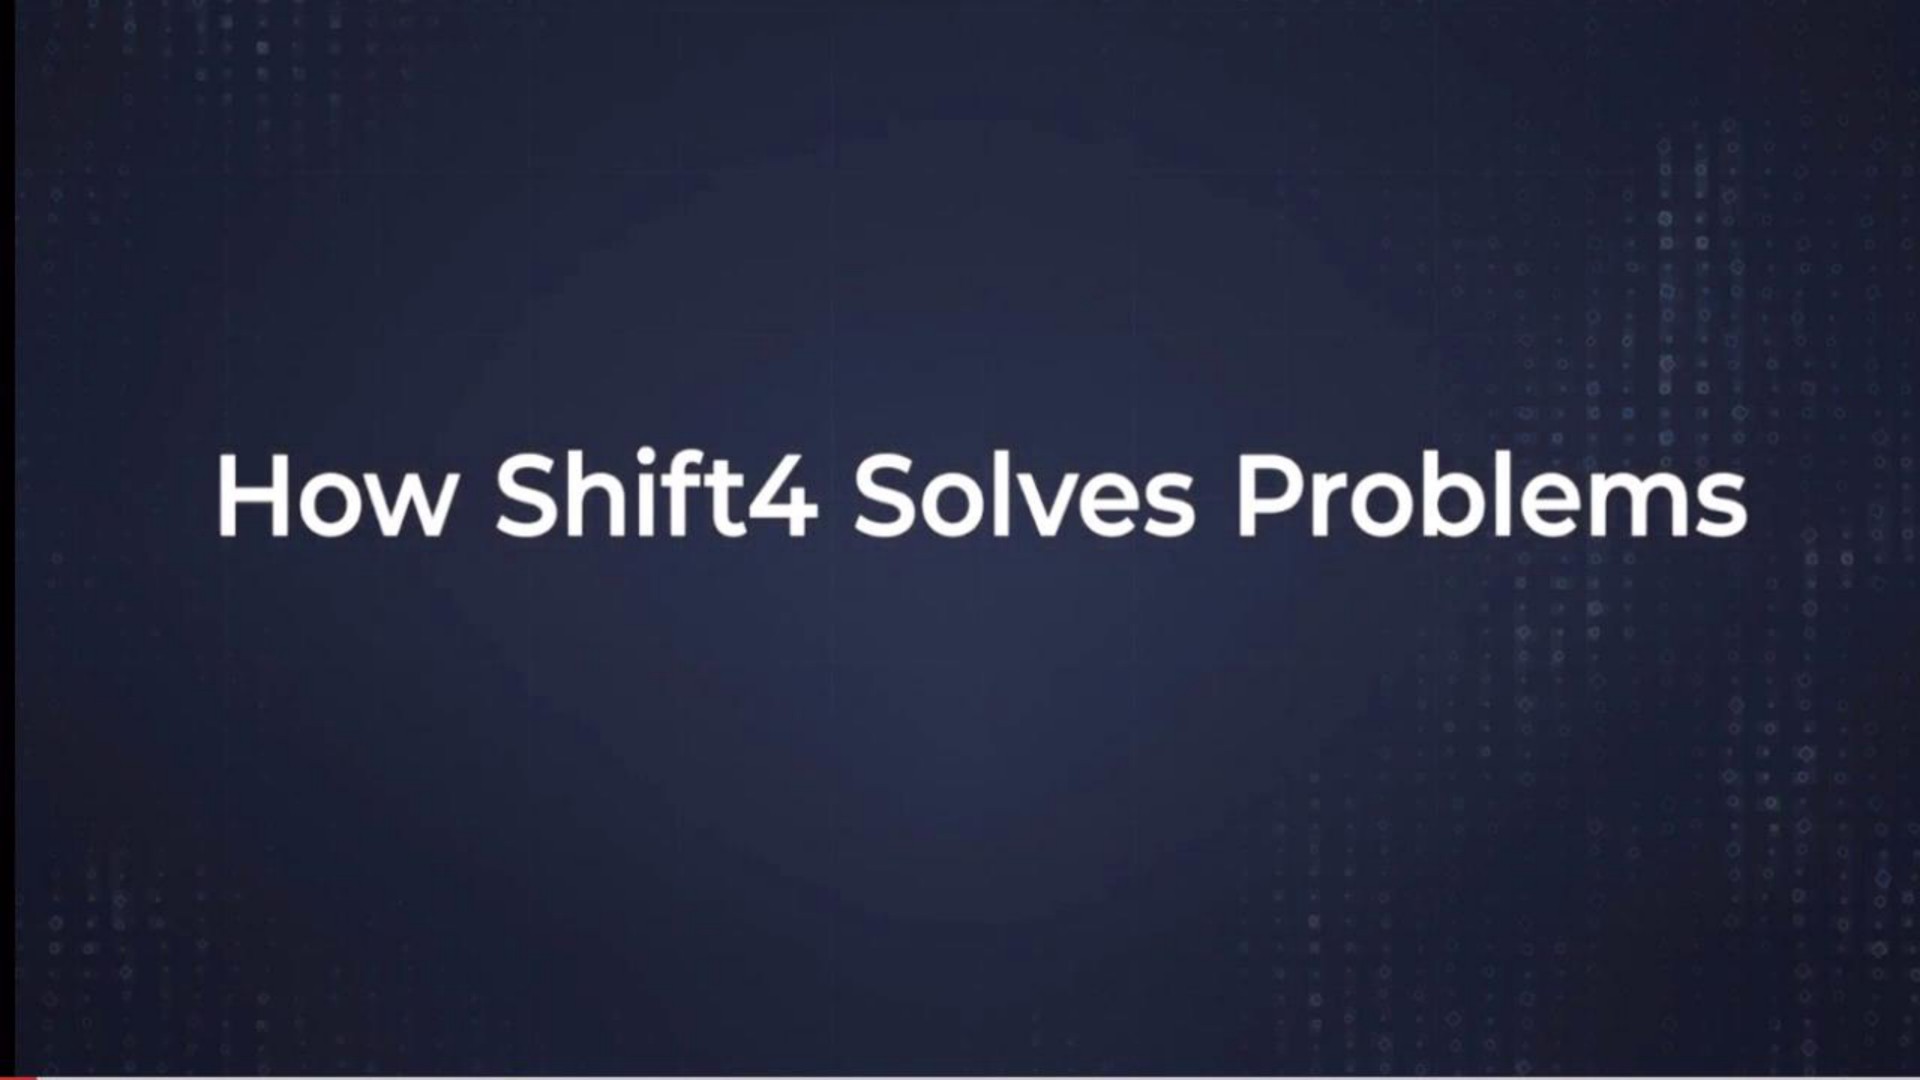 how shift solves problems | Shift4